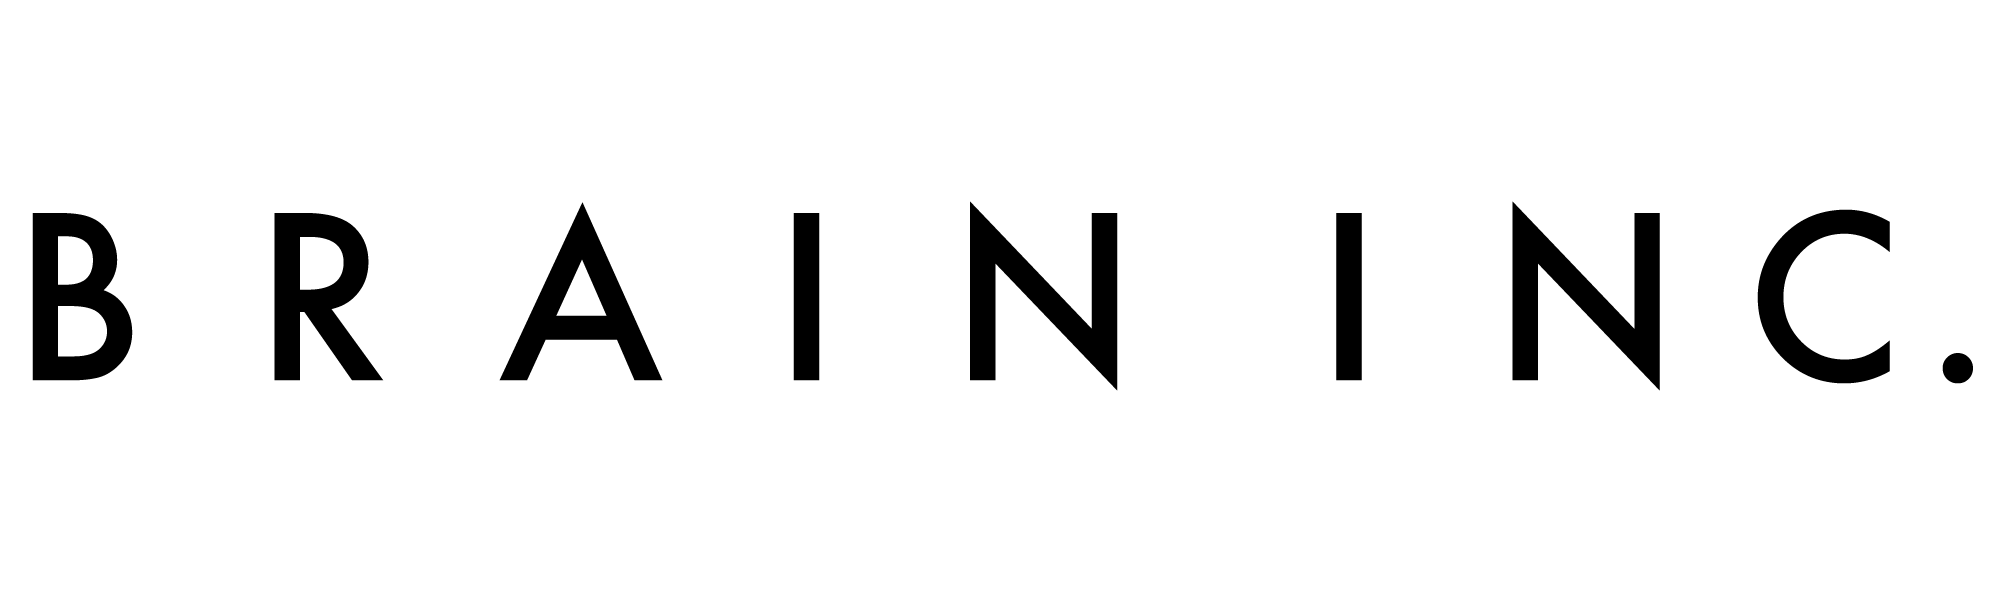 brain-logotype